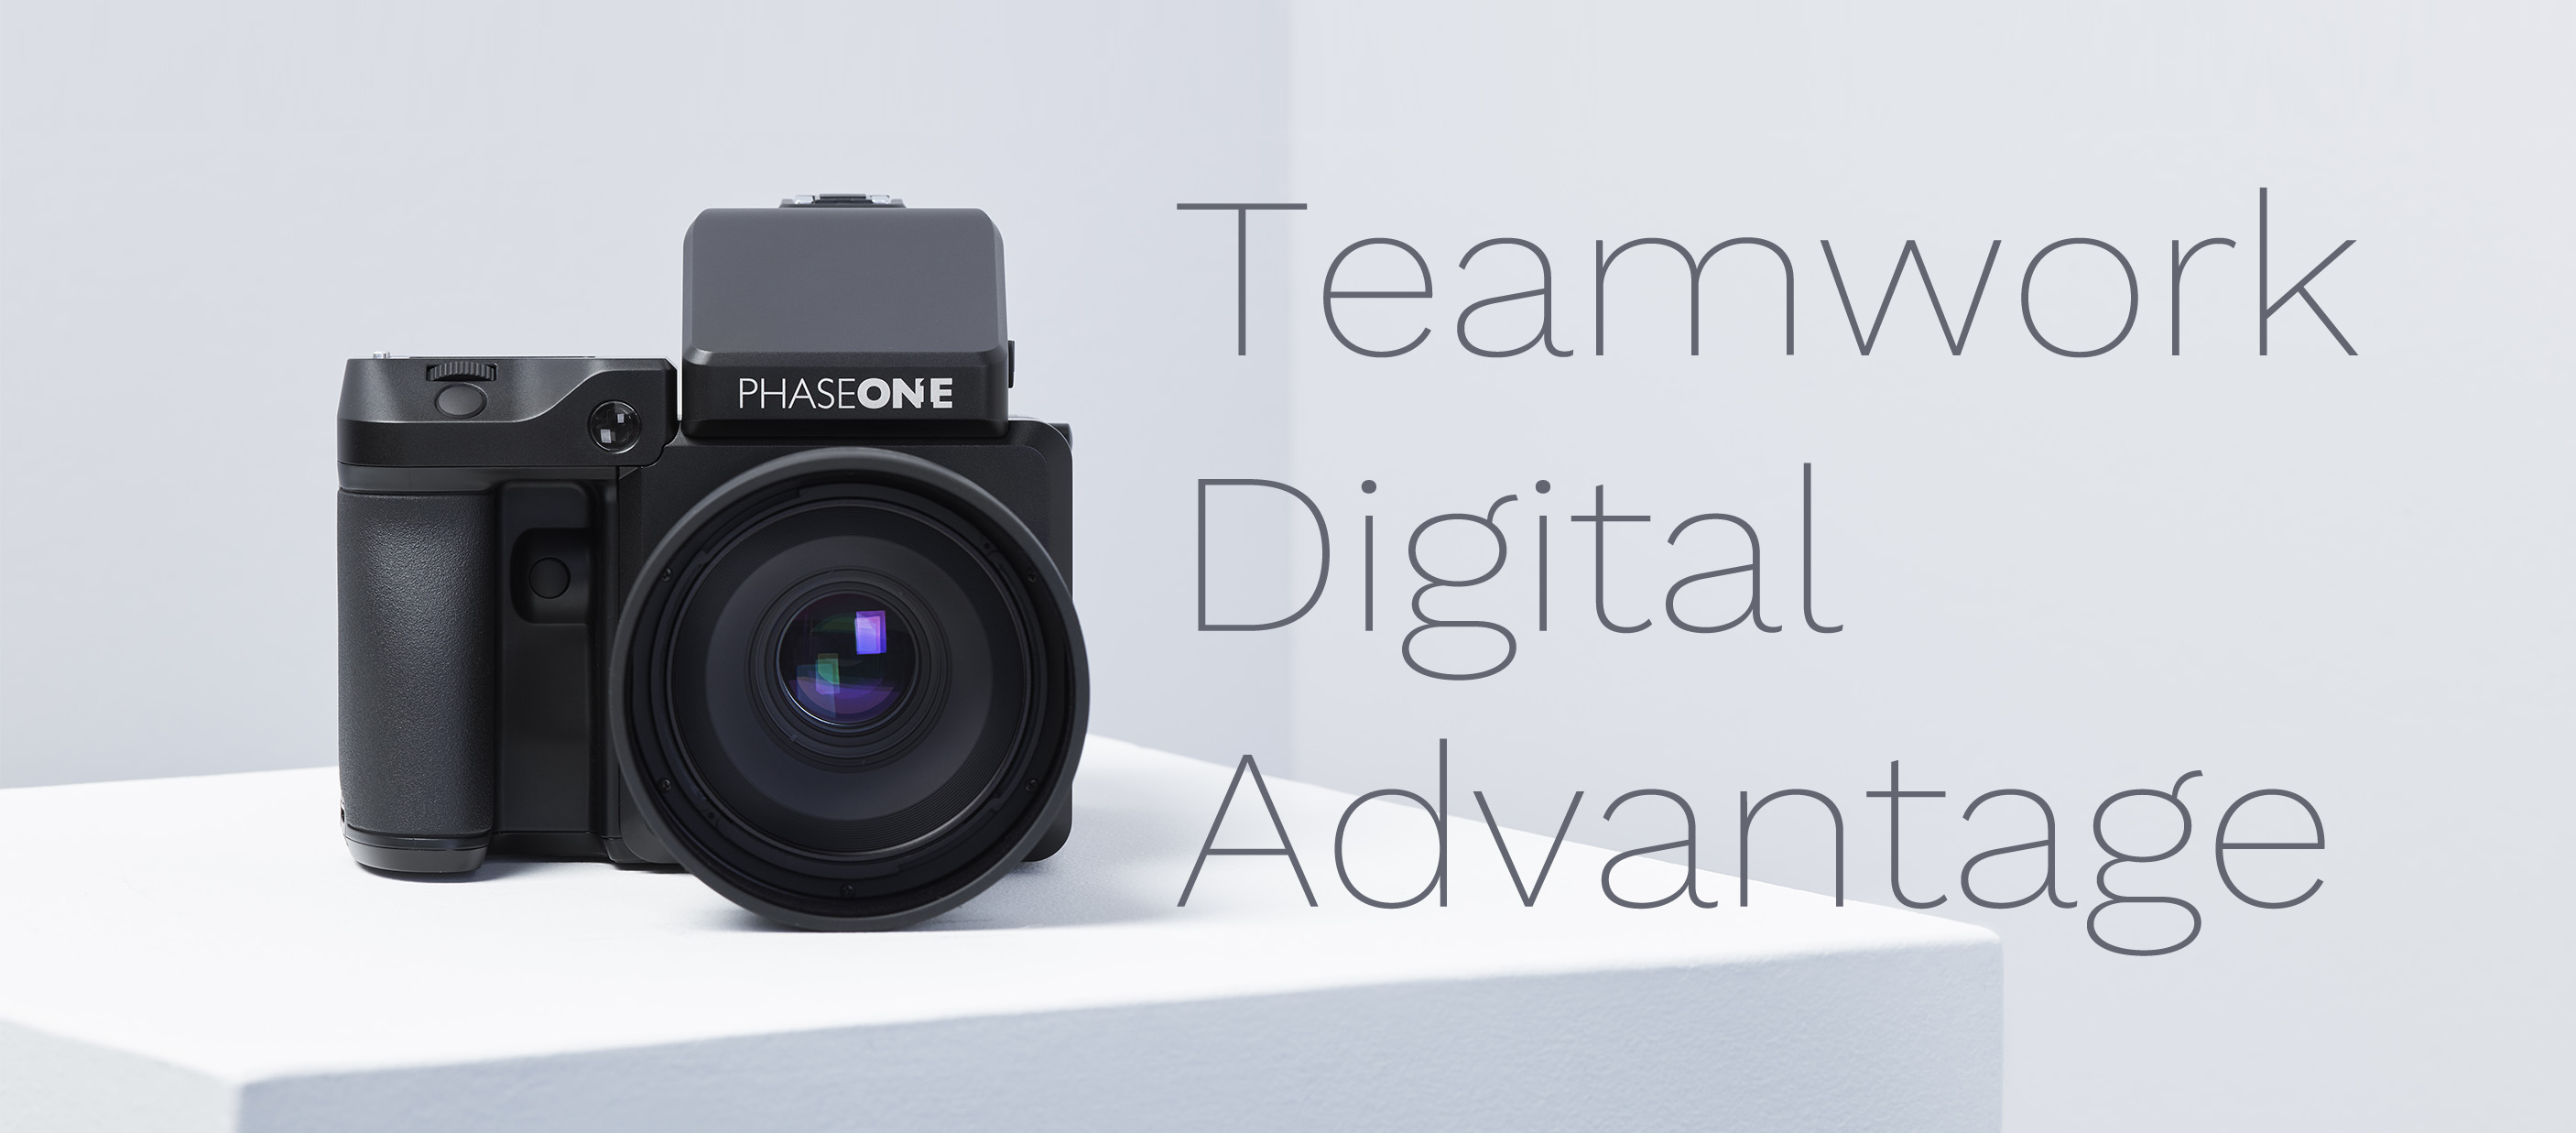 The teamwork digital advantage